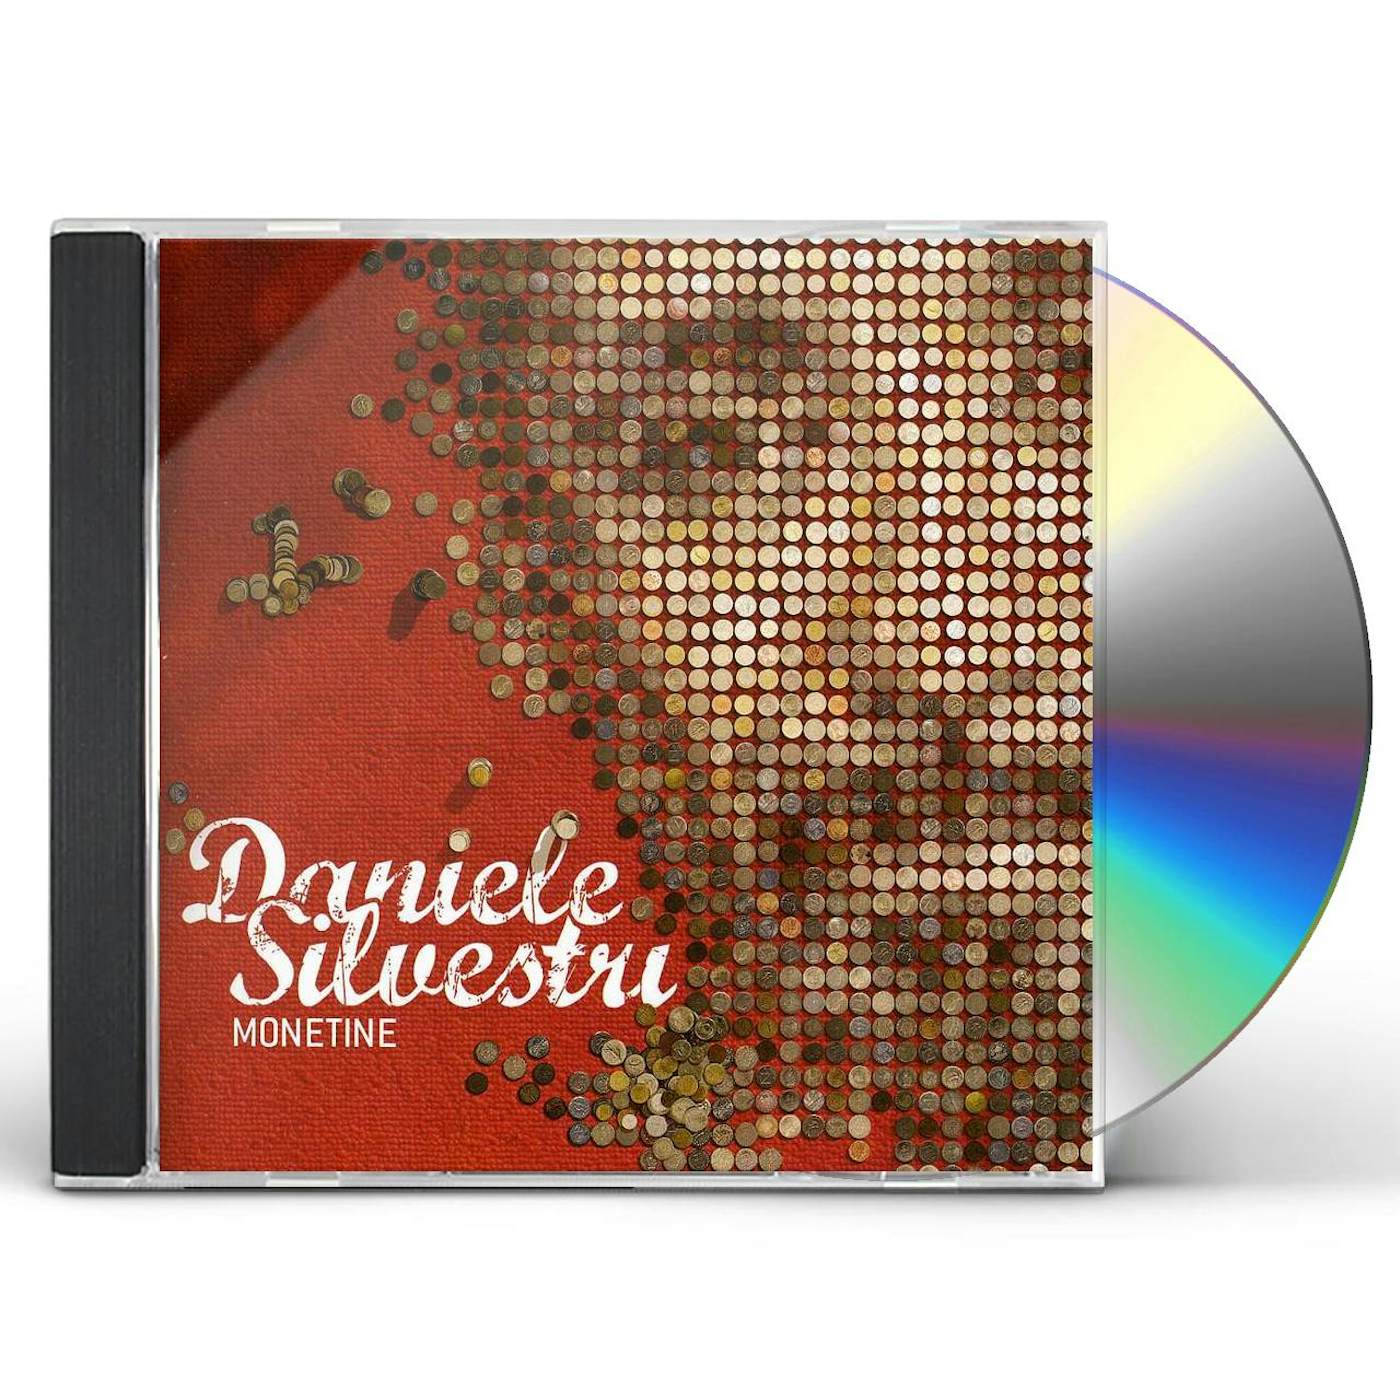 Daniele Silvestri MONETINE CD